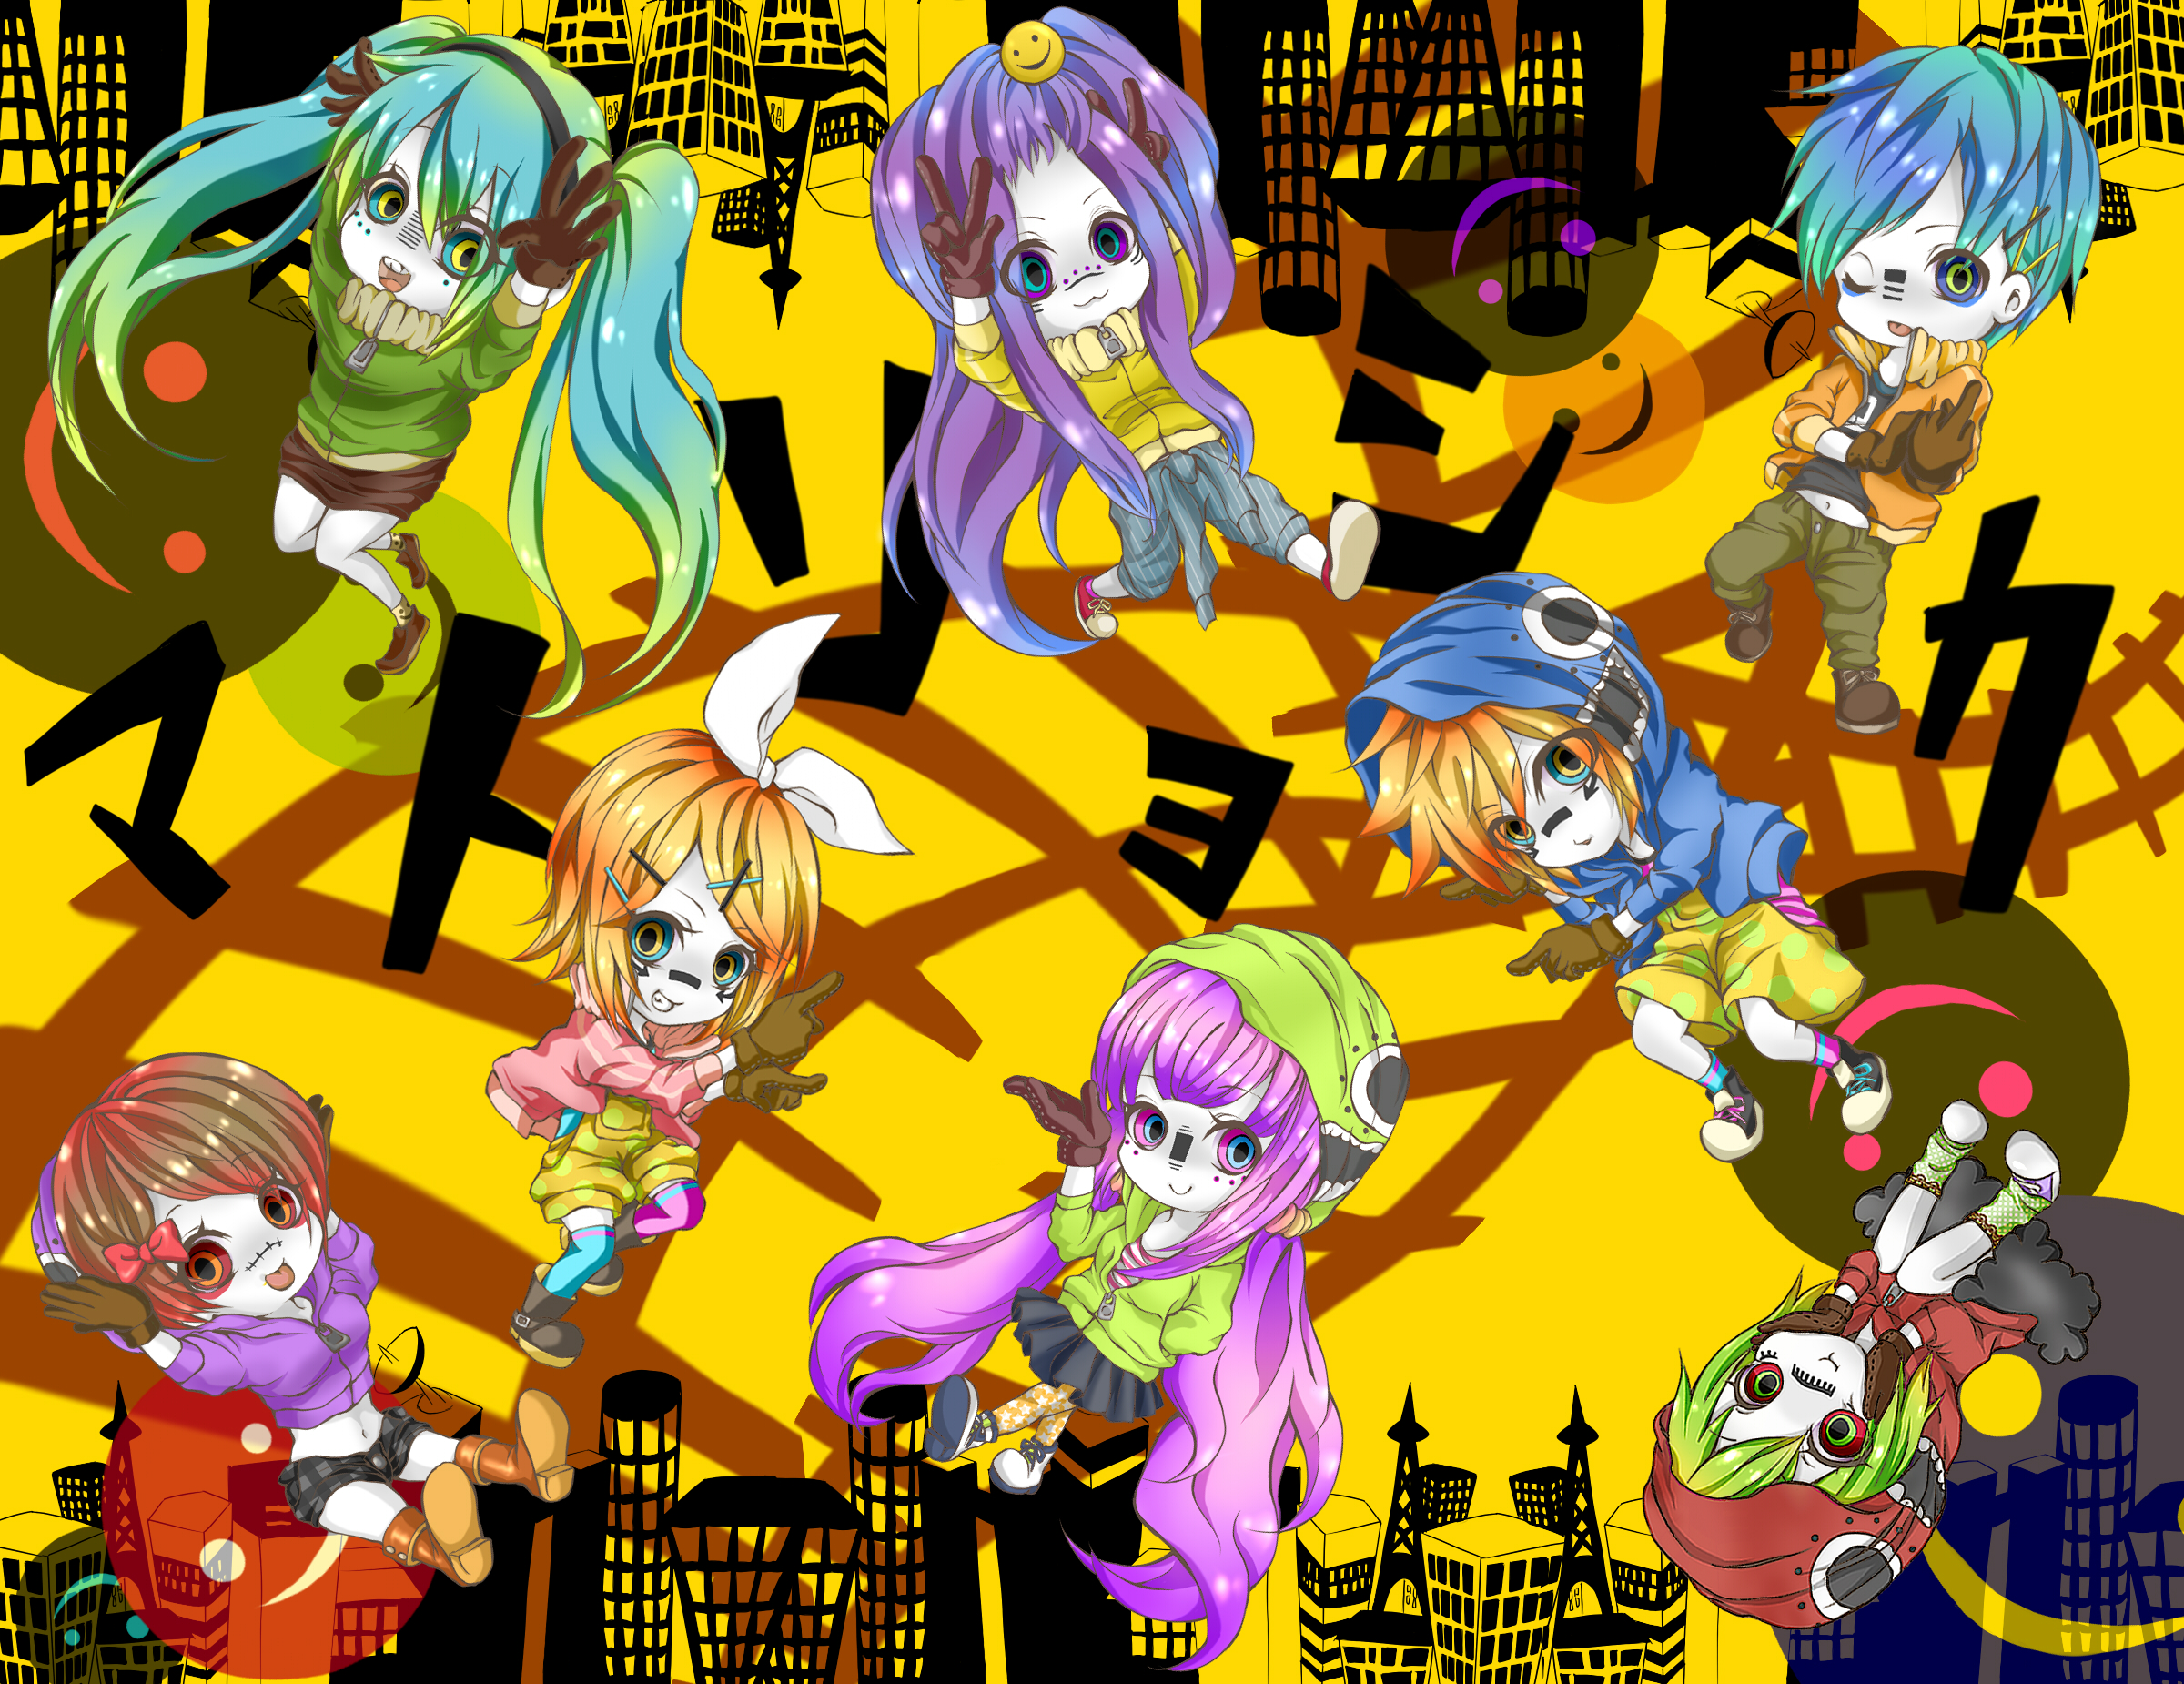 Descarga gratis la imagen Vocaloid, Animado, Hatsune Miku, Rin Kagamine, Gumi (Vocaloid), Kaito (Vocaloid), Len Kagamine, Meiko (Vocaloid), Kamui Gakupo, Yuzuki Yukari en el escritorio de tu PC